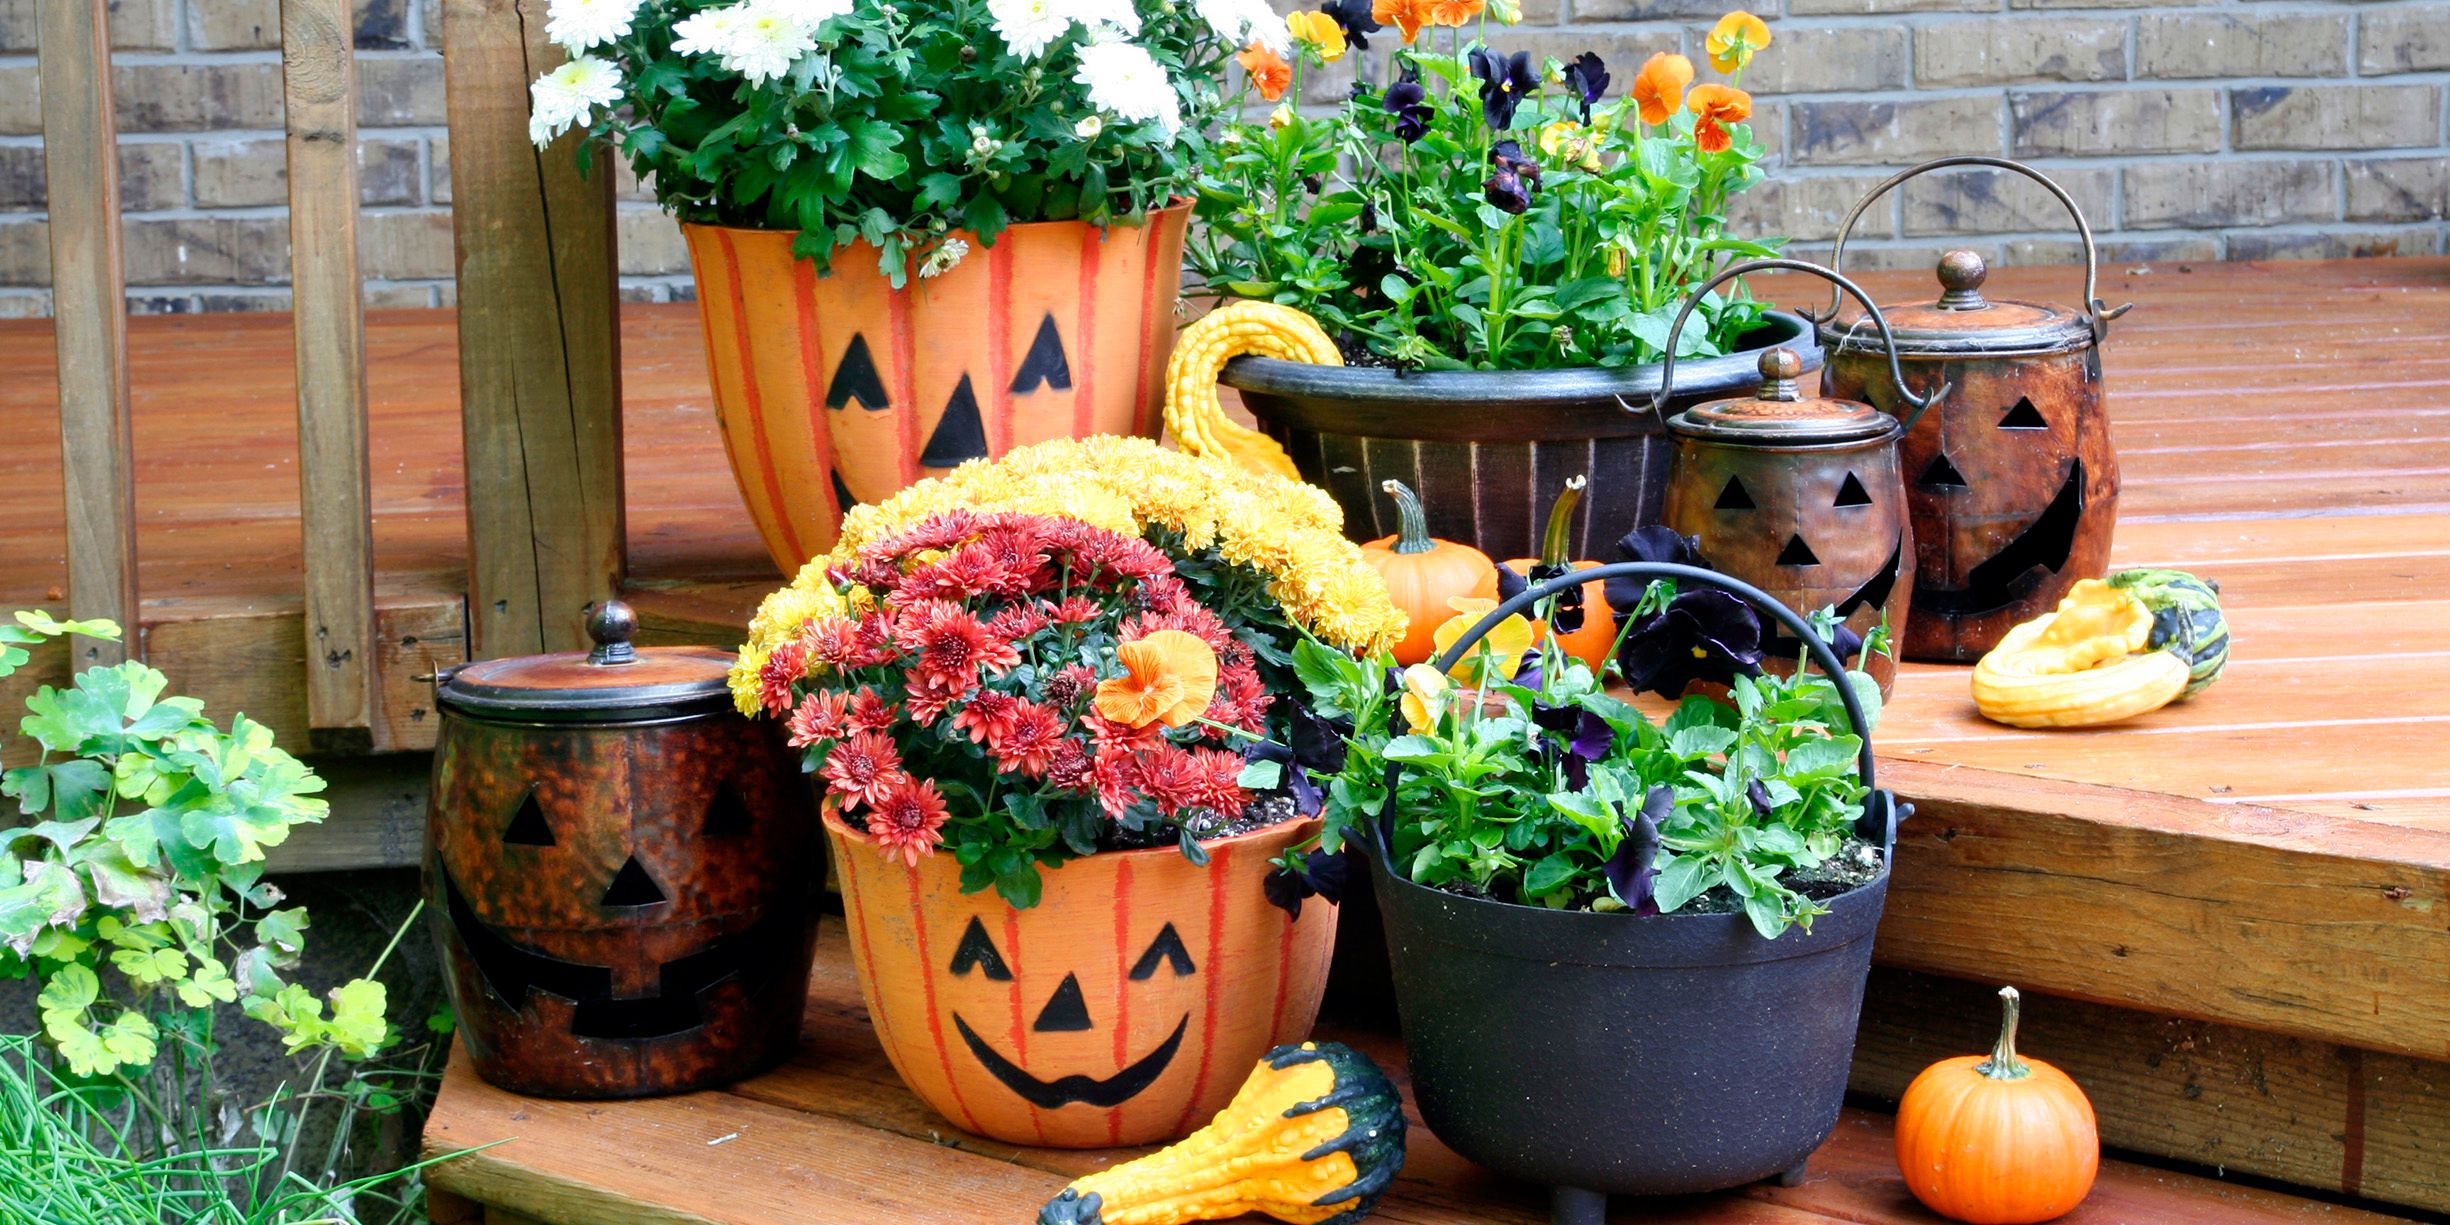 43 Best Outdoor Halloween Decoration Ideas - Easy Halloween Yard and